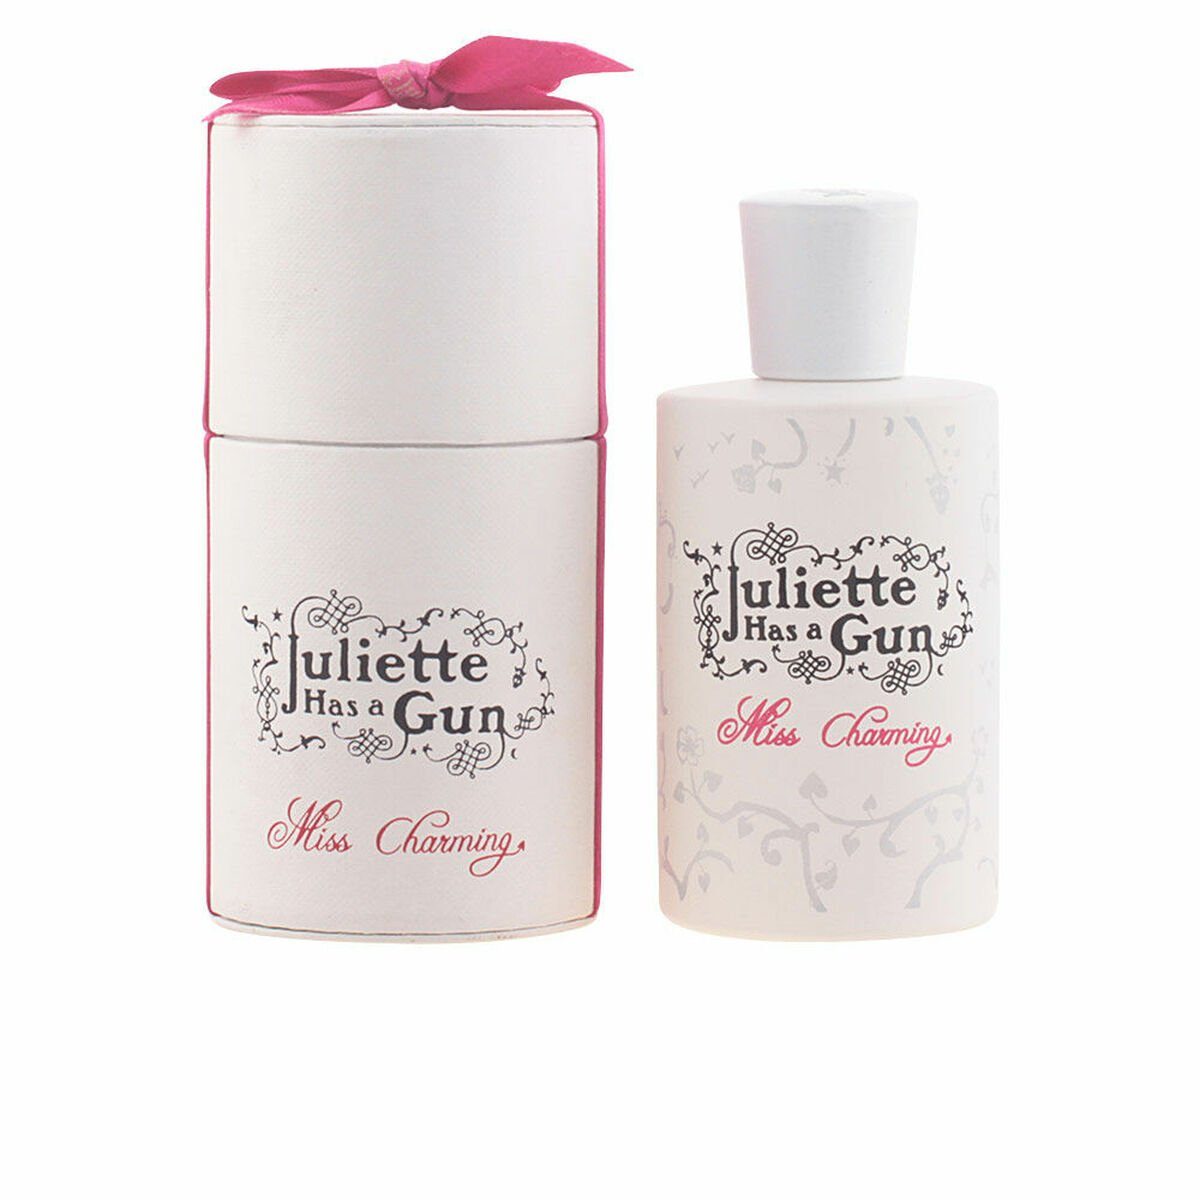 Juliette has a Gun 100 Parfum de Toilette Eau Damenparfüm de Charming Has Juliette Gun A ml Miss Eau